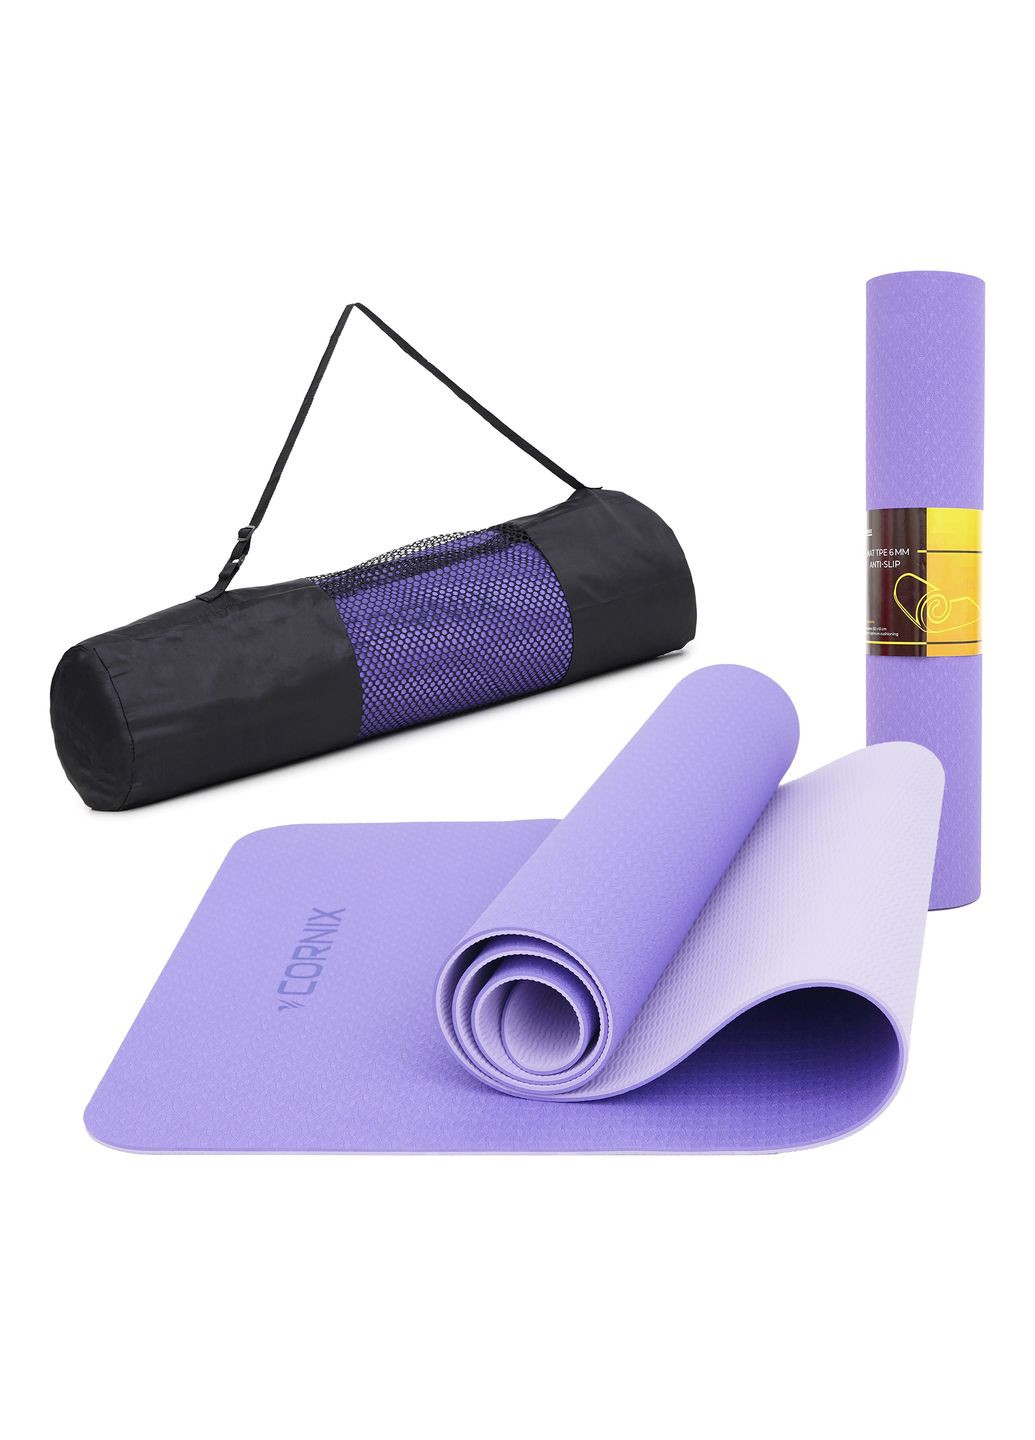 Коврик спортивный TPE 183 x 61 x 0.6 cм для йоги и фитнеса XR0004 Violet/Purple Cornix xr-0004 (275654224)